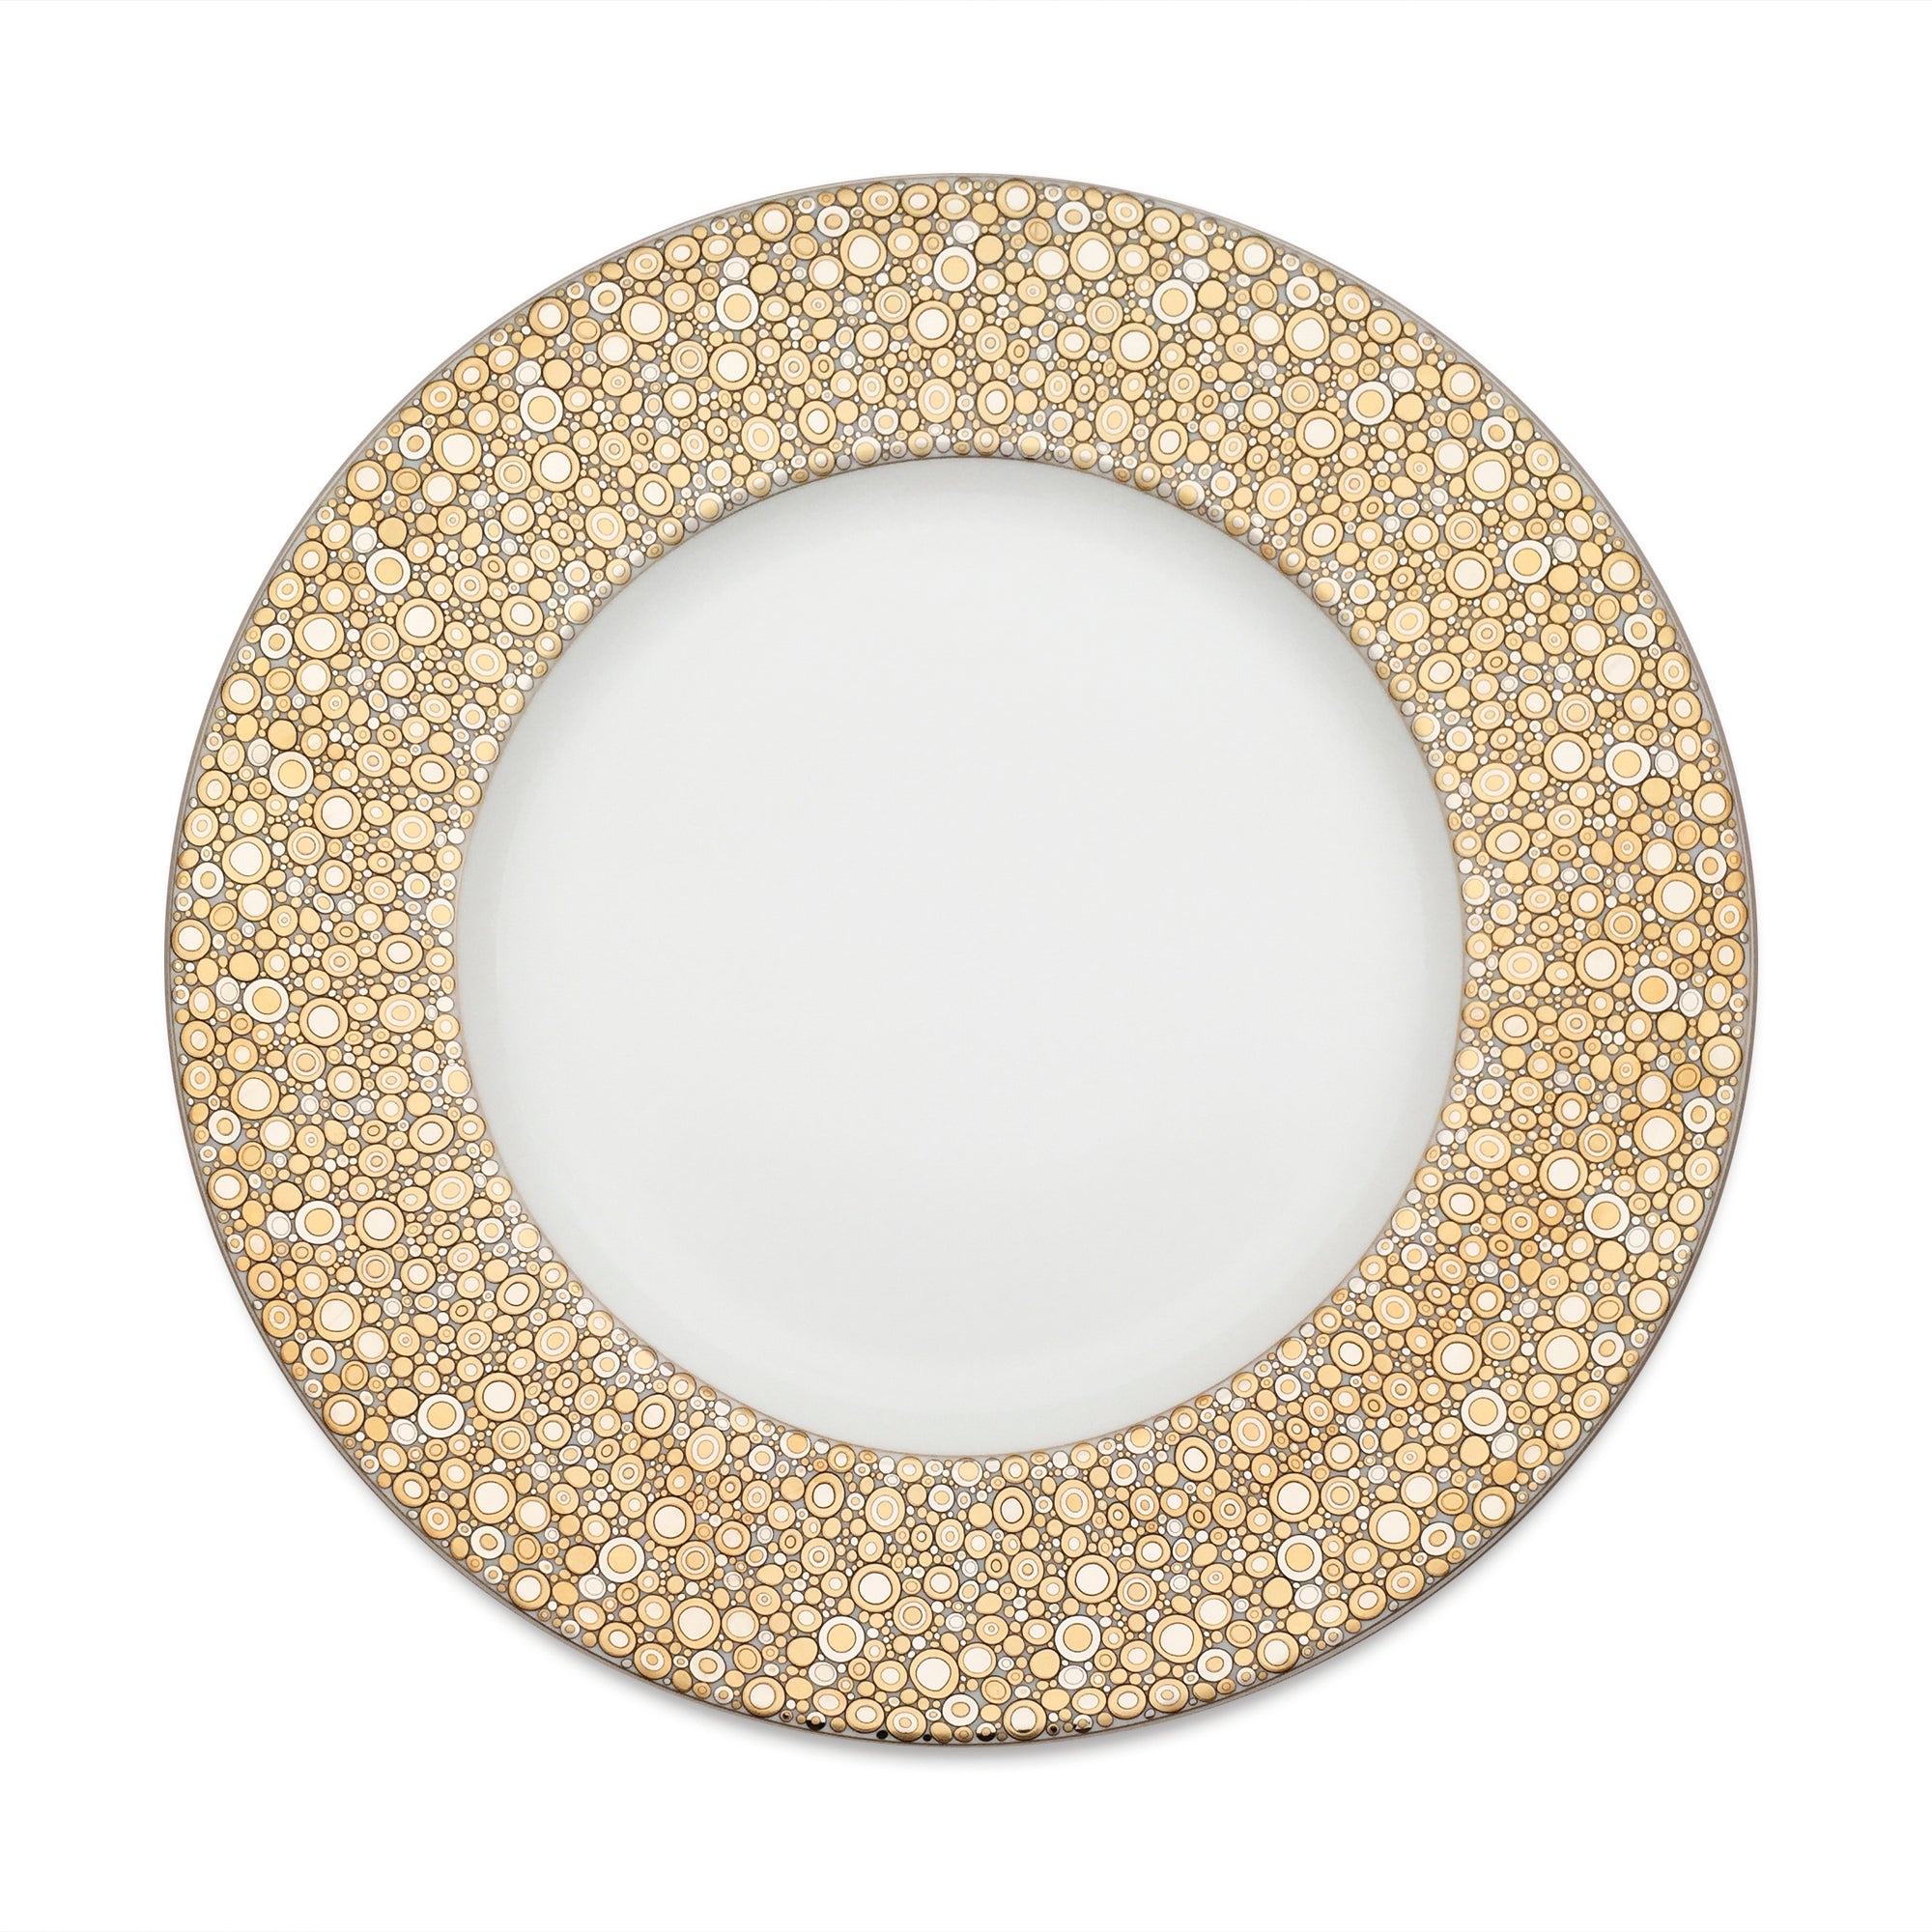 Ellington Shimmer Gold & Platinum Dinner Plate - Caskata